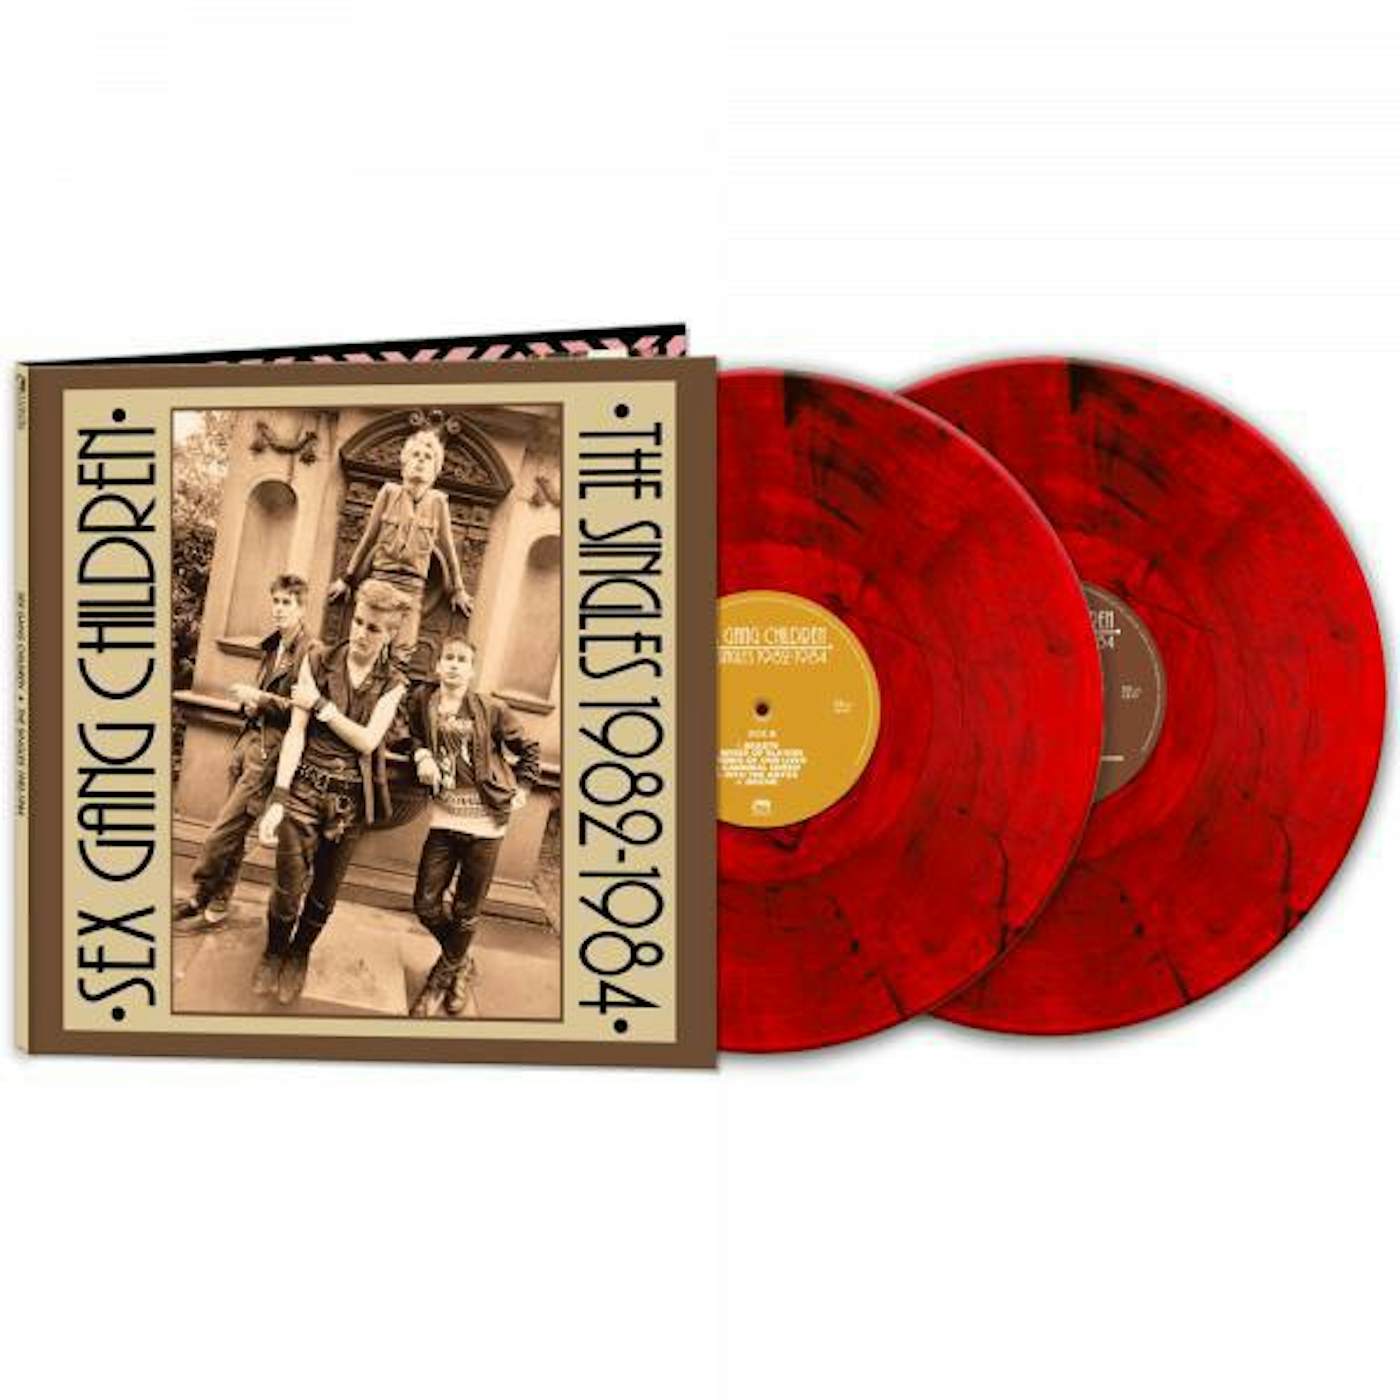 Sex Gang Children Singles 1982-1984 (Red Marble Vinyl Record)